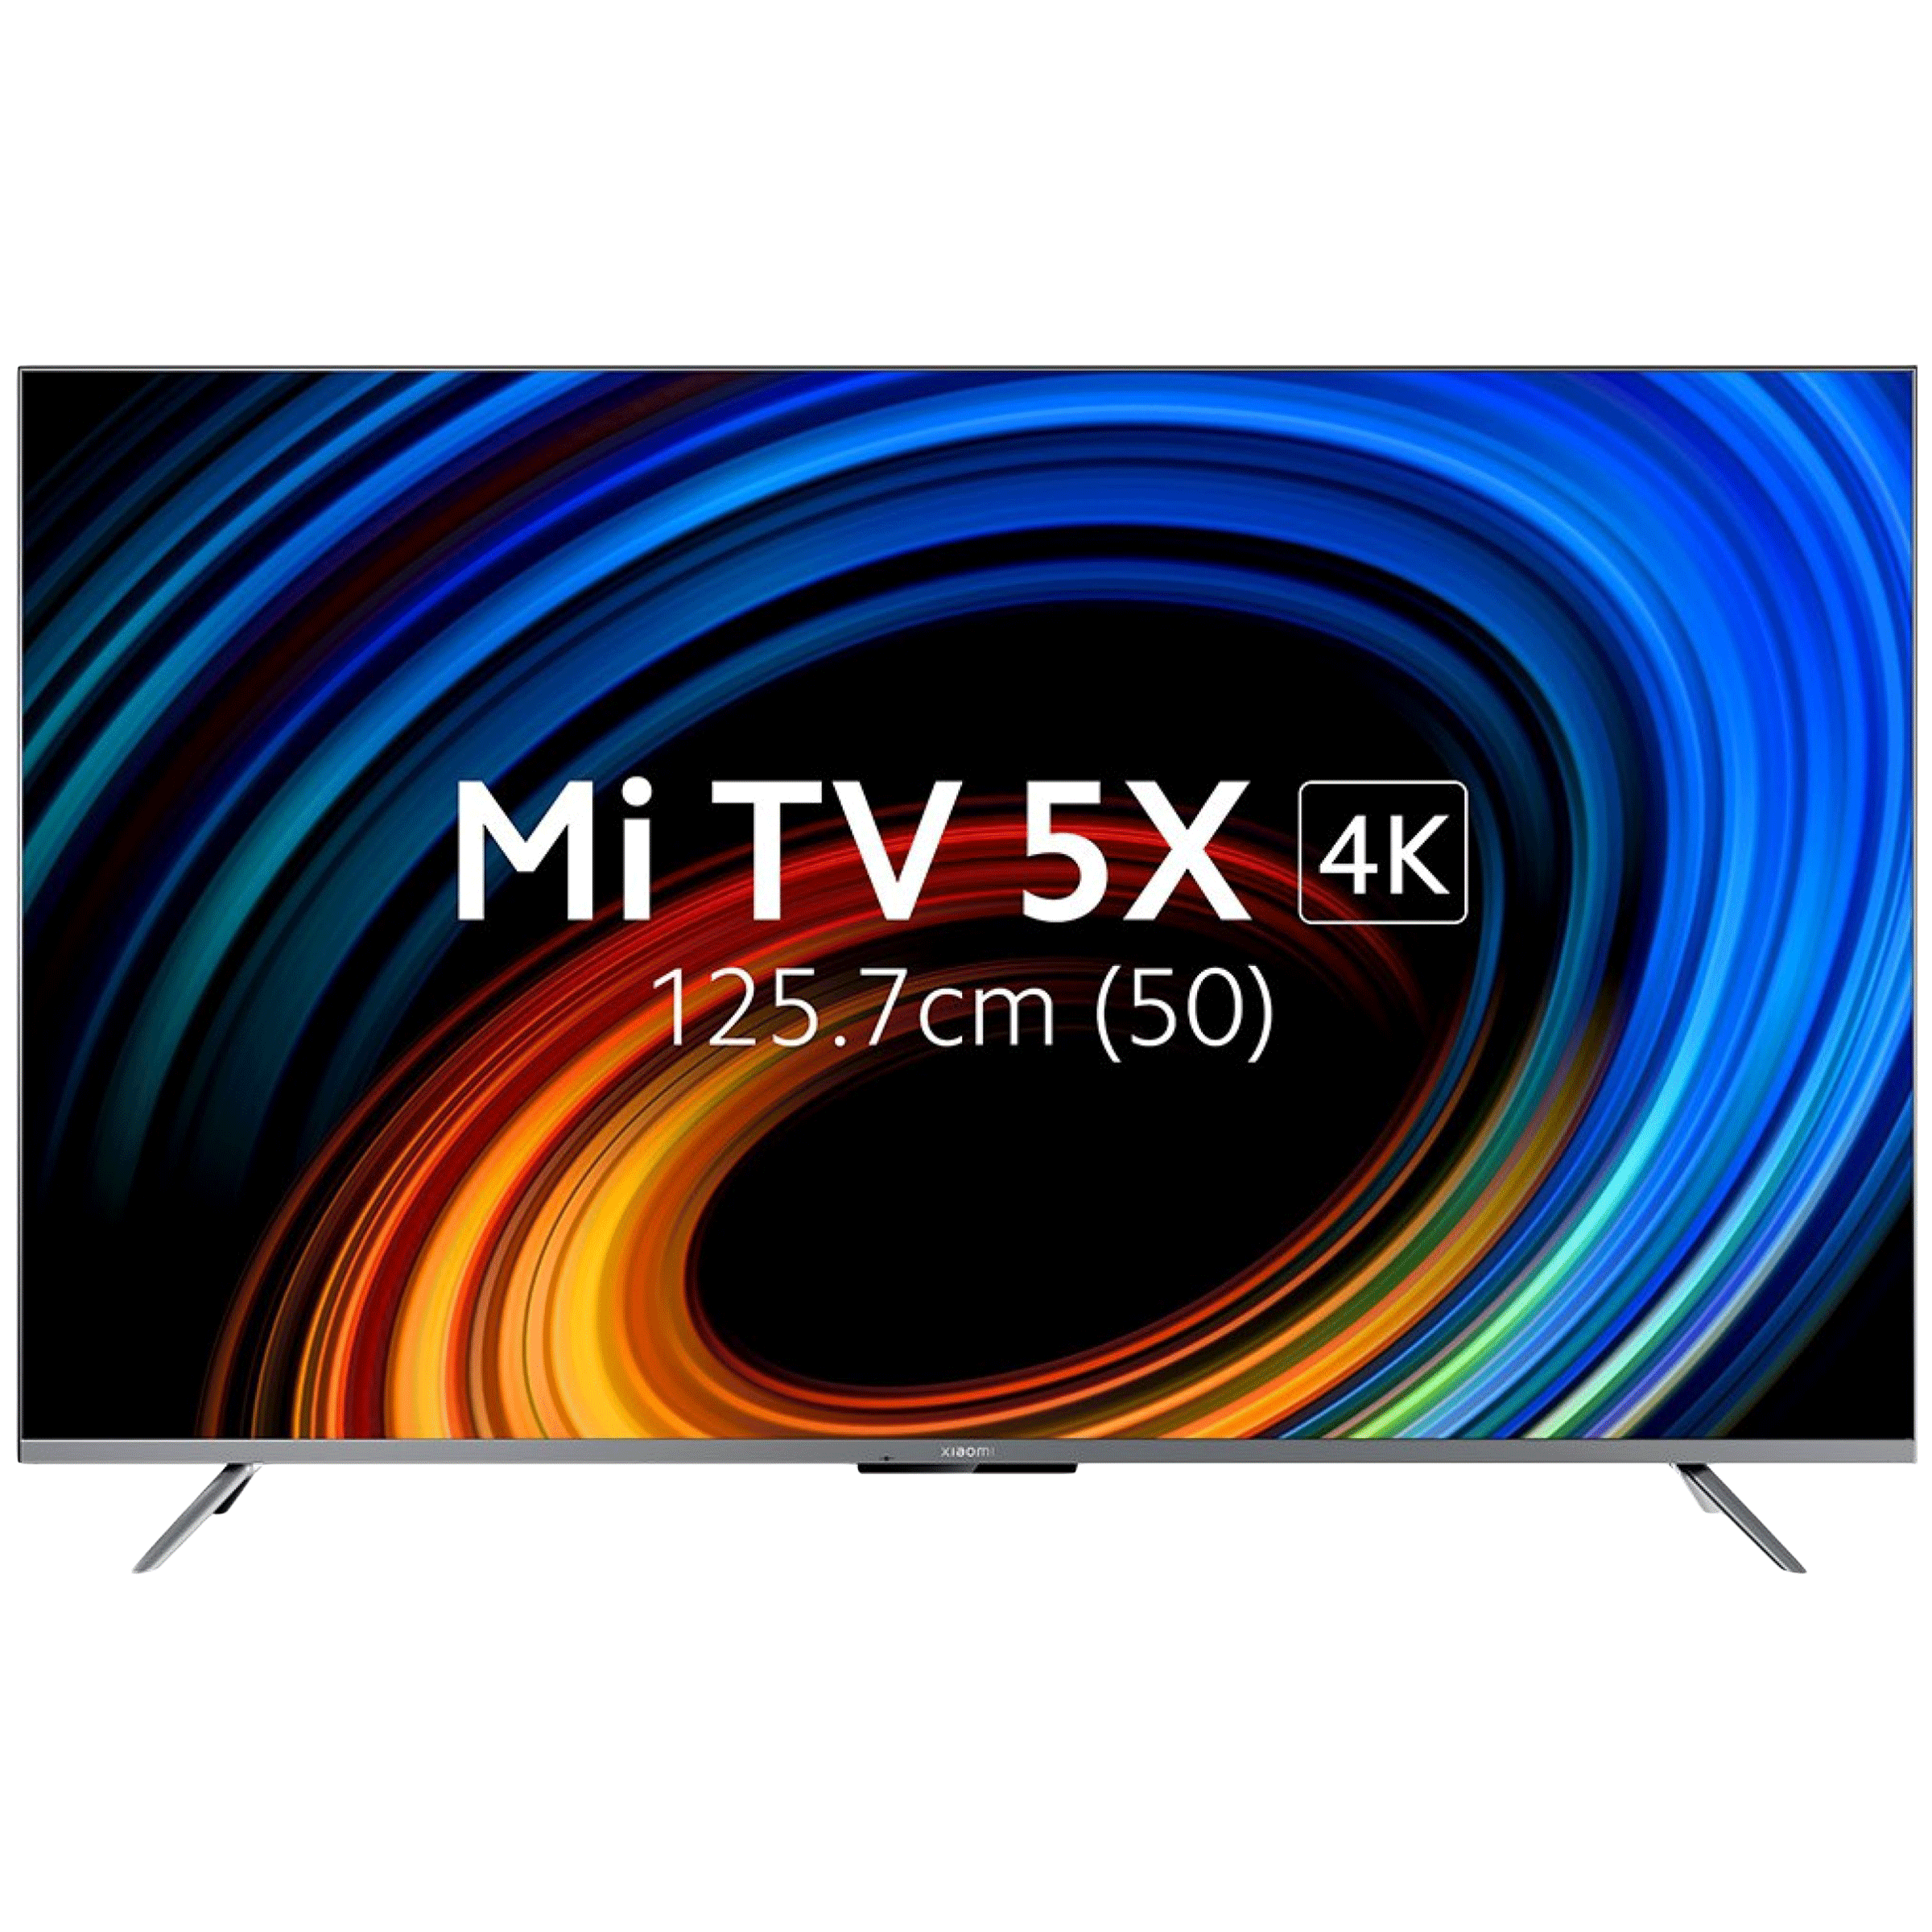 Xiaomi Mi TV 5X 125.7cm (50 Inch) Ultra HD 4K LED Android Smart TV (Google and Alexa Supported, L50M6-ES, Metallic Grey)